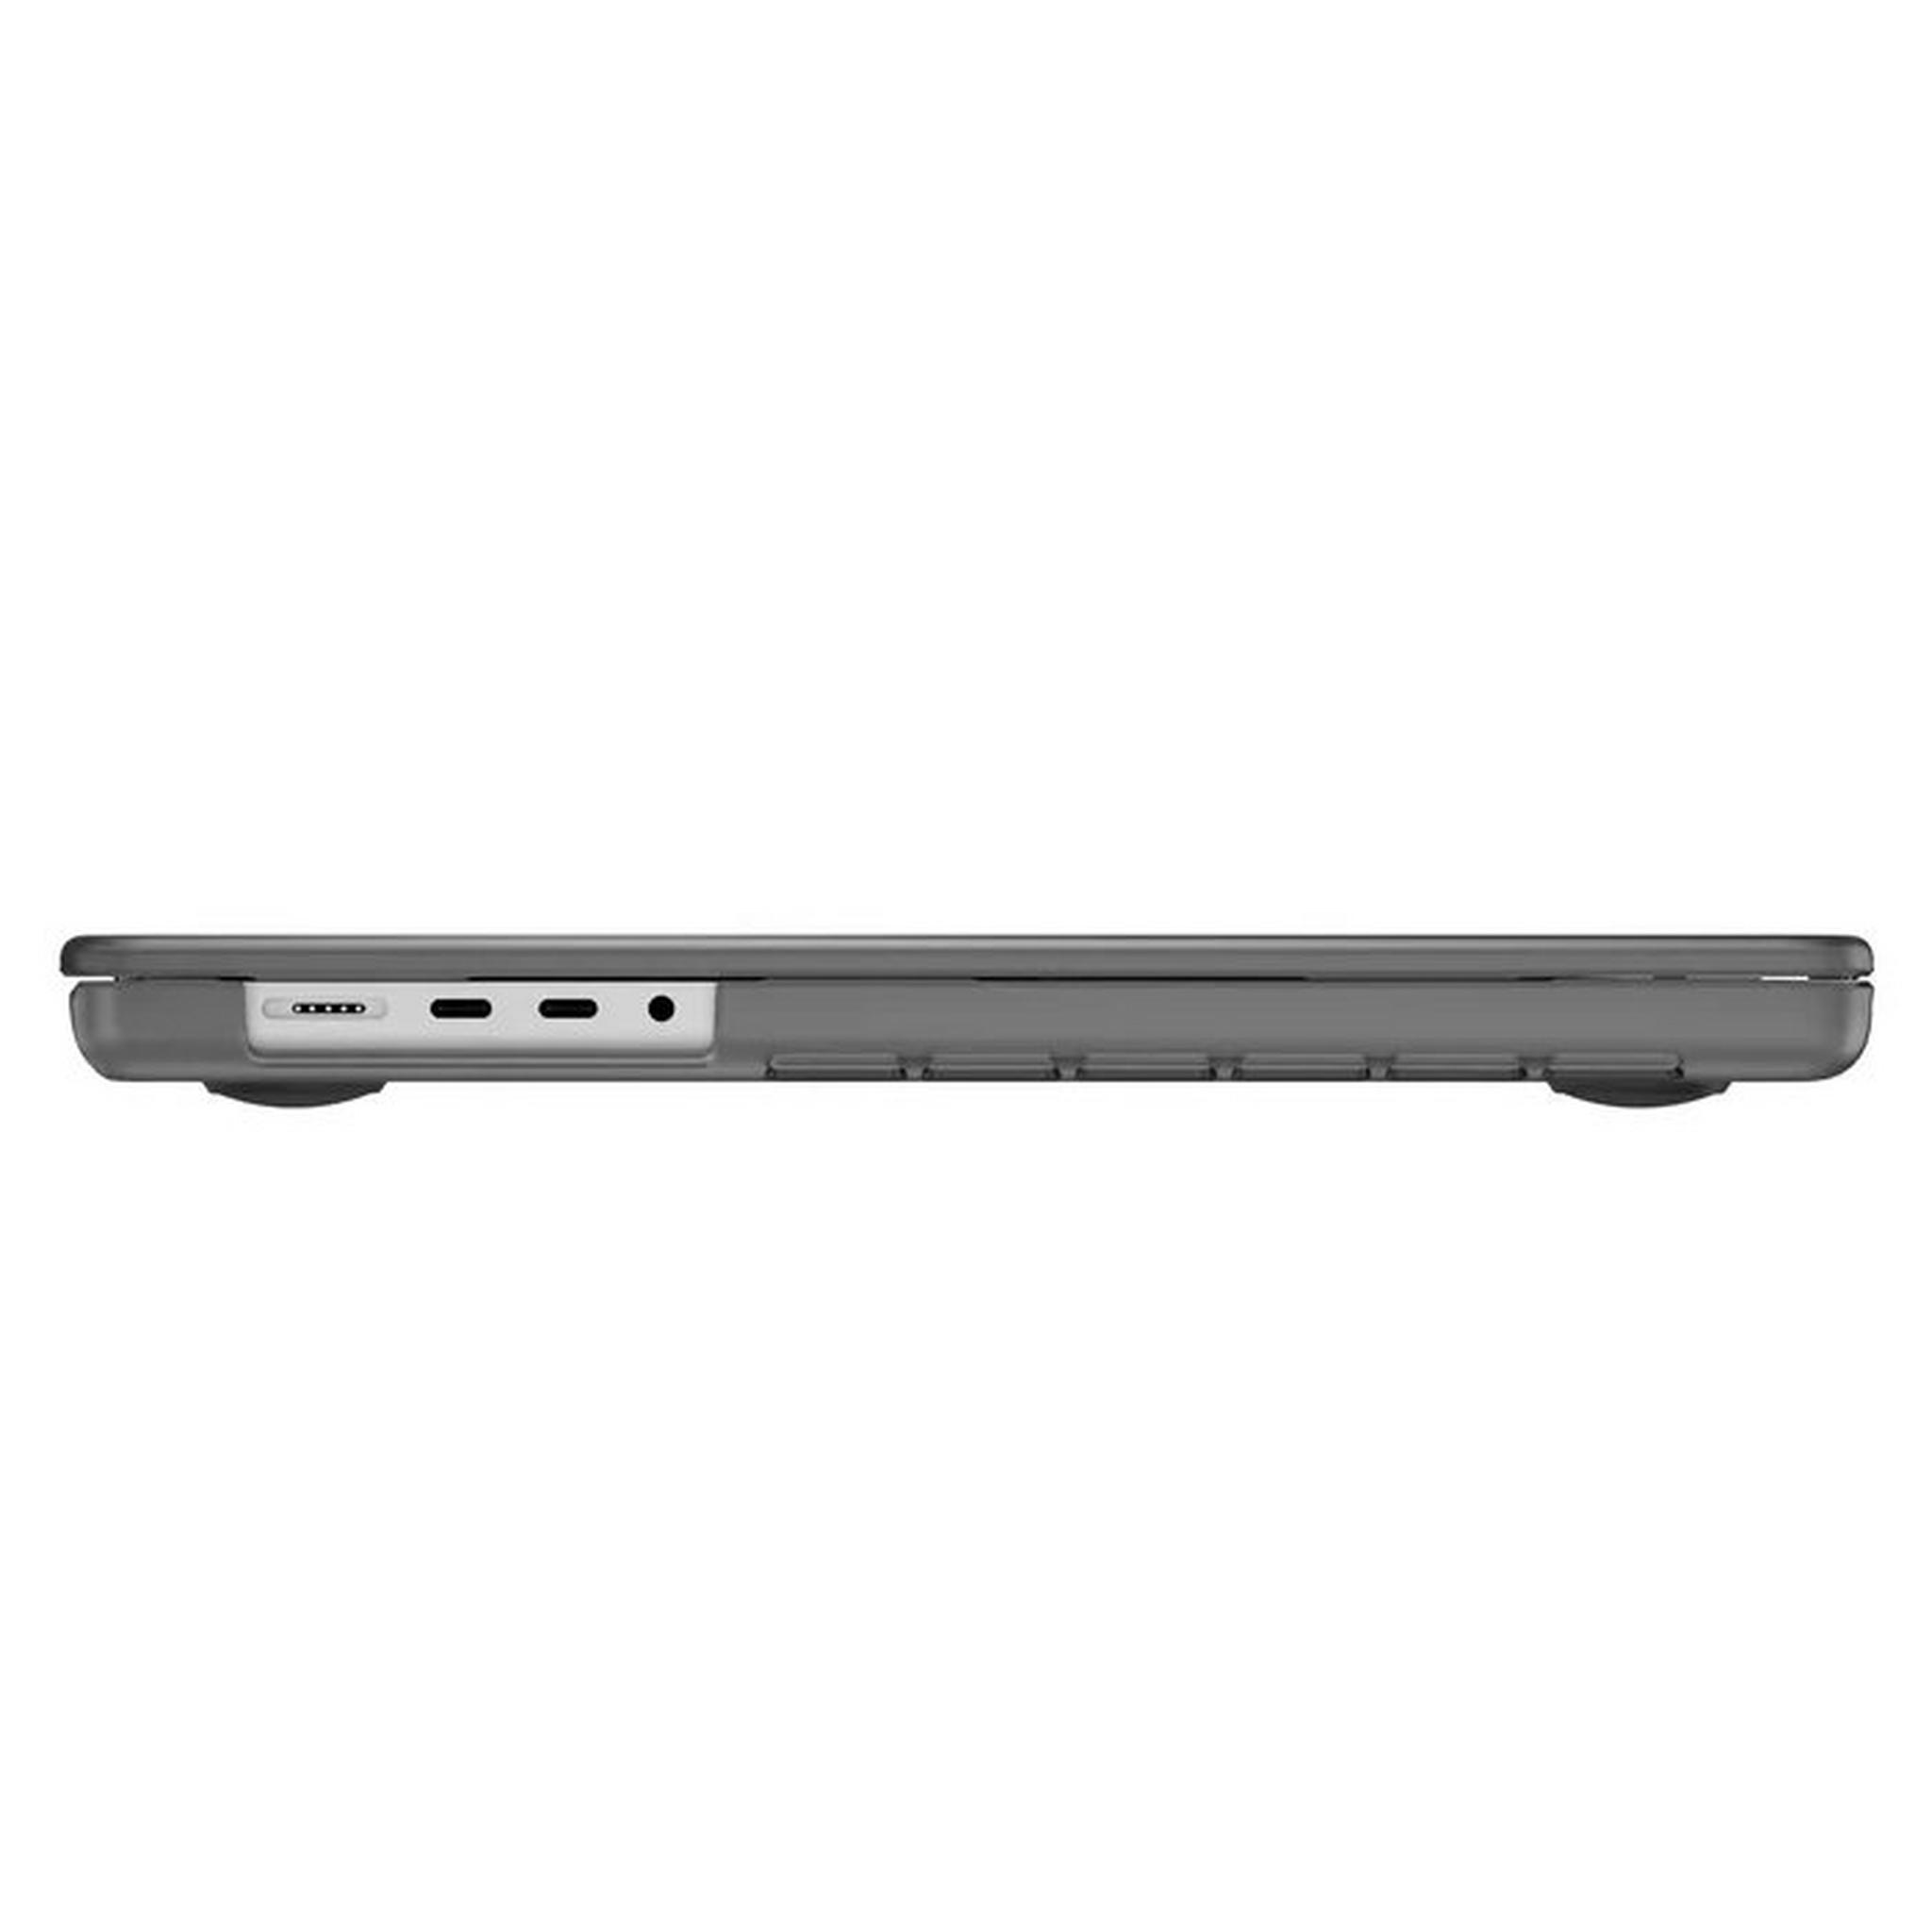 Speck SmartShell Case for 16-inch MacBook Pro, 144895-0581- Graphite Grey